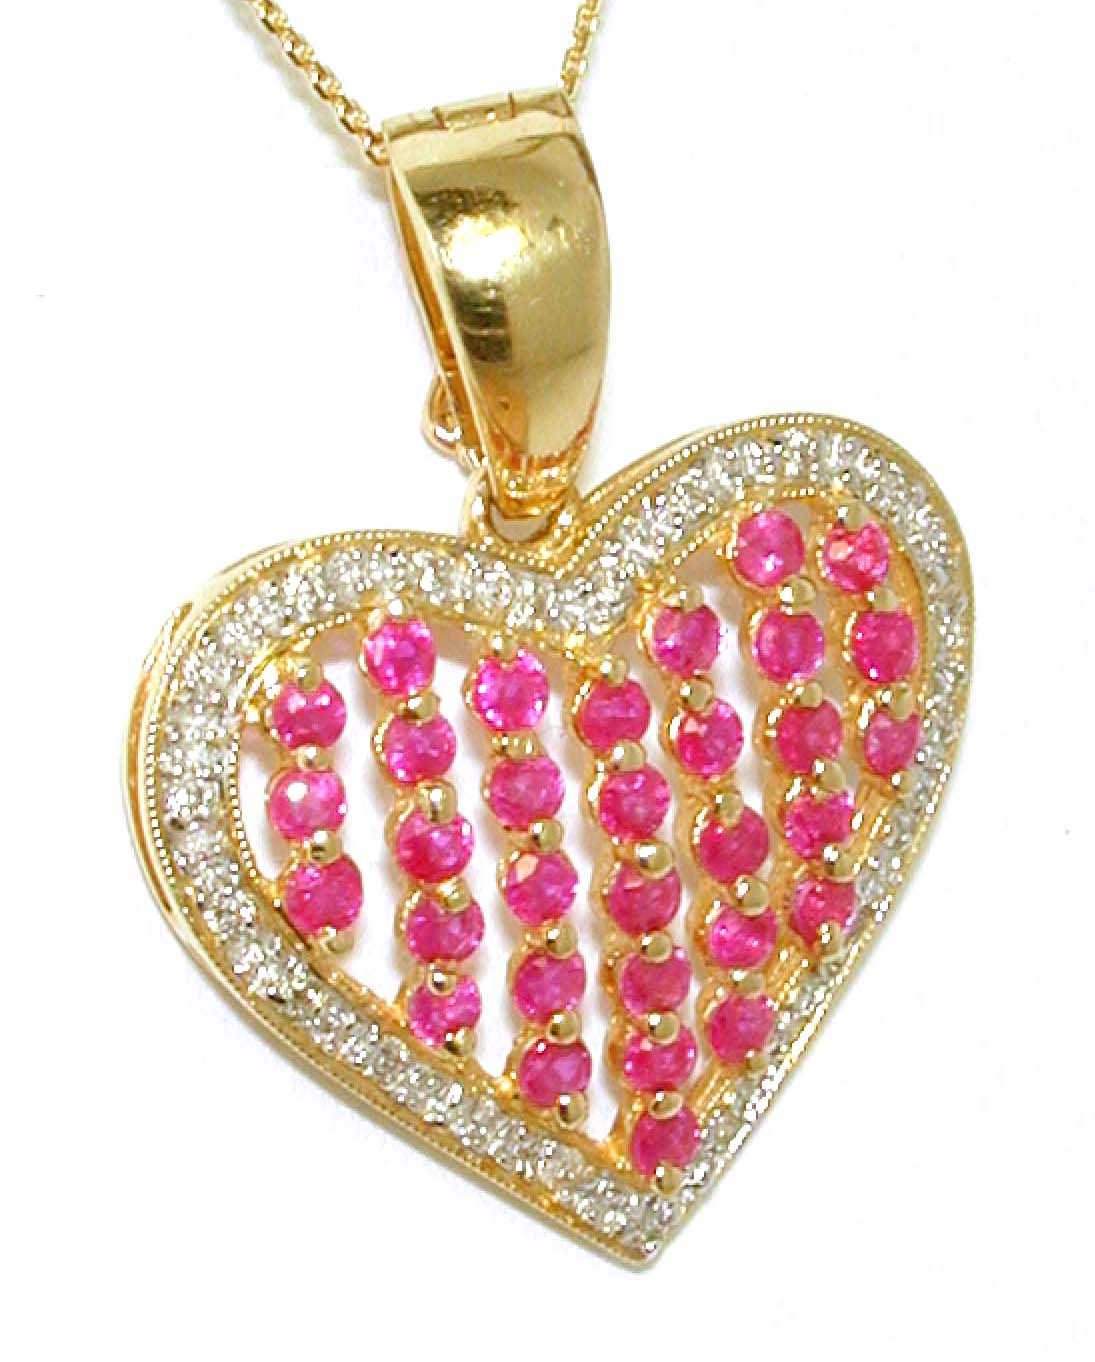 
Elegant Round Ruby and Diamond Heart Pendant
